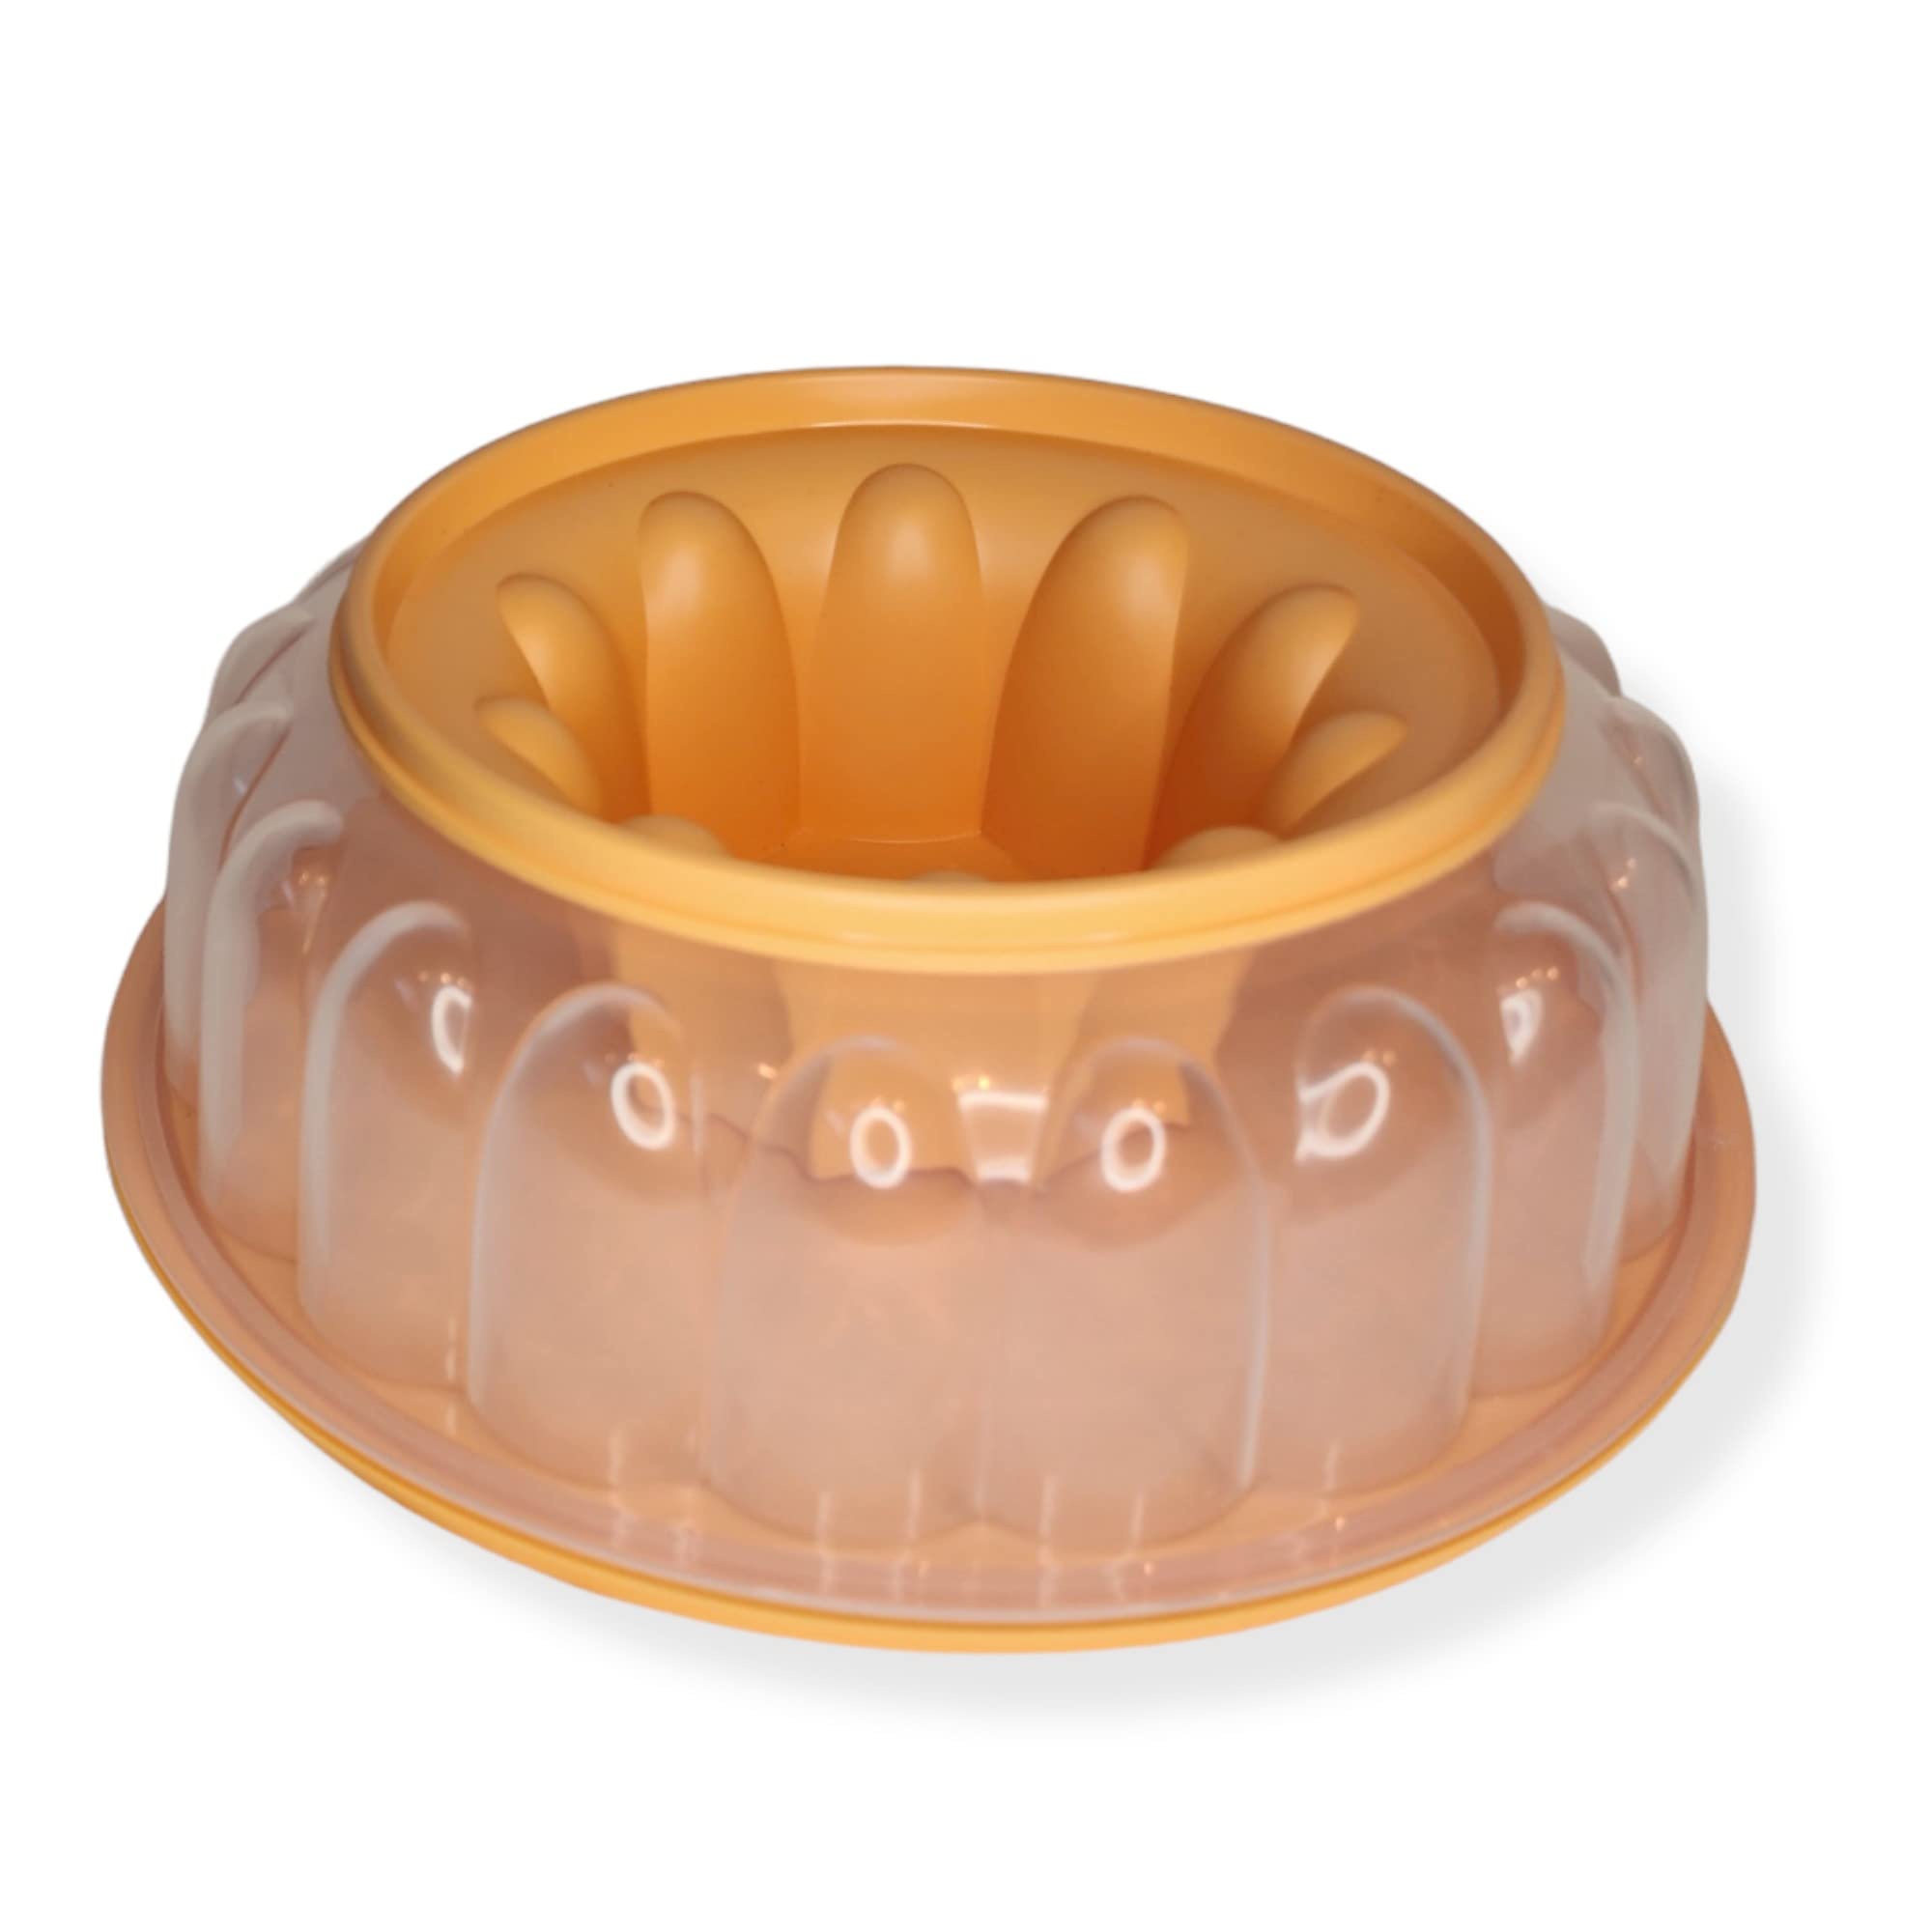 Tupperware Jel-ring Jello Mold,6 Cups